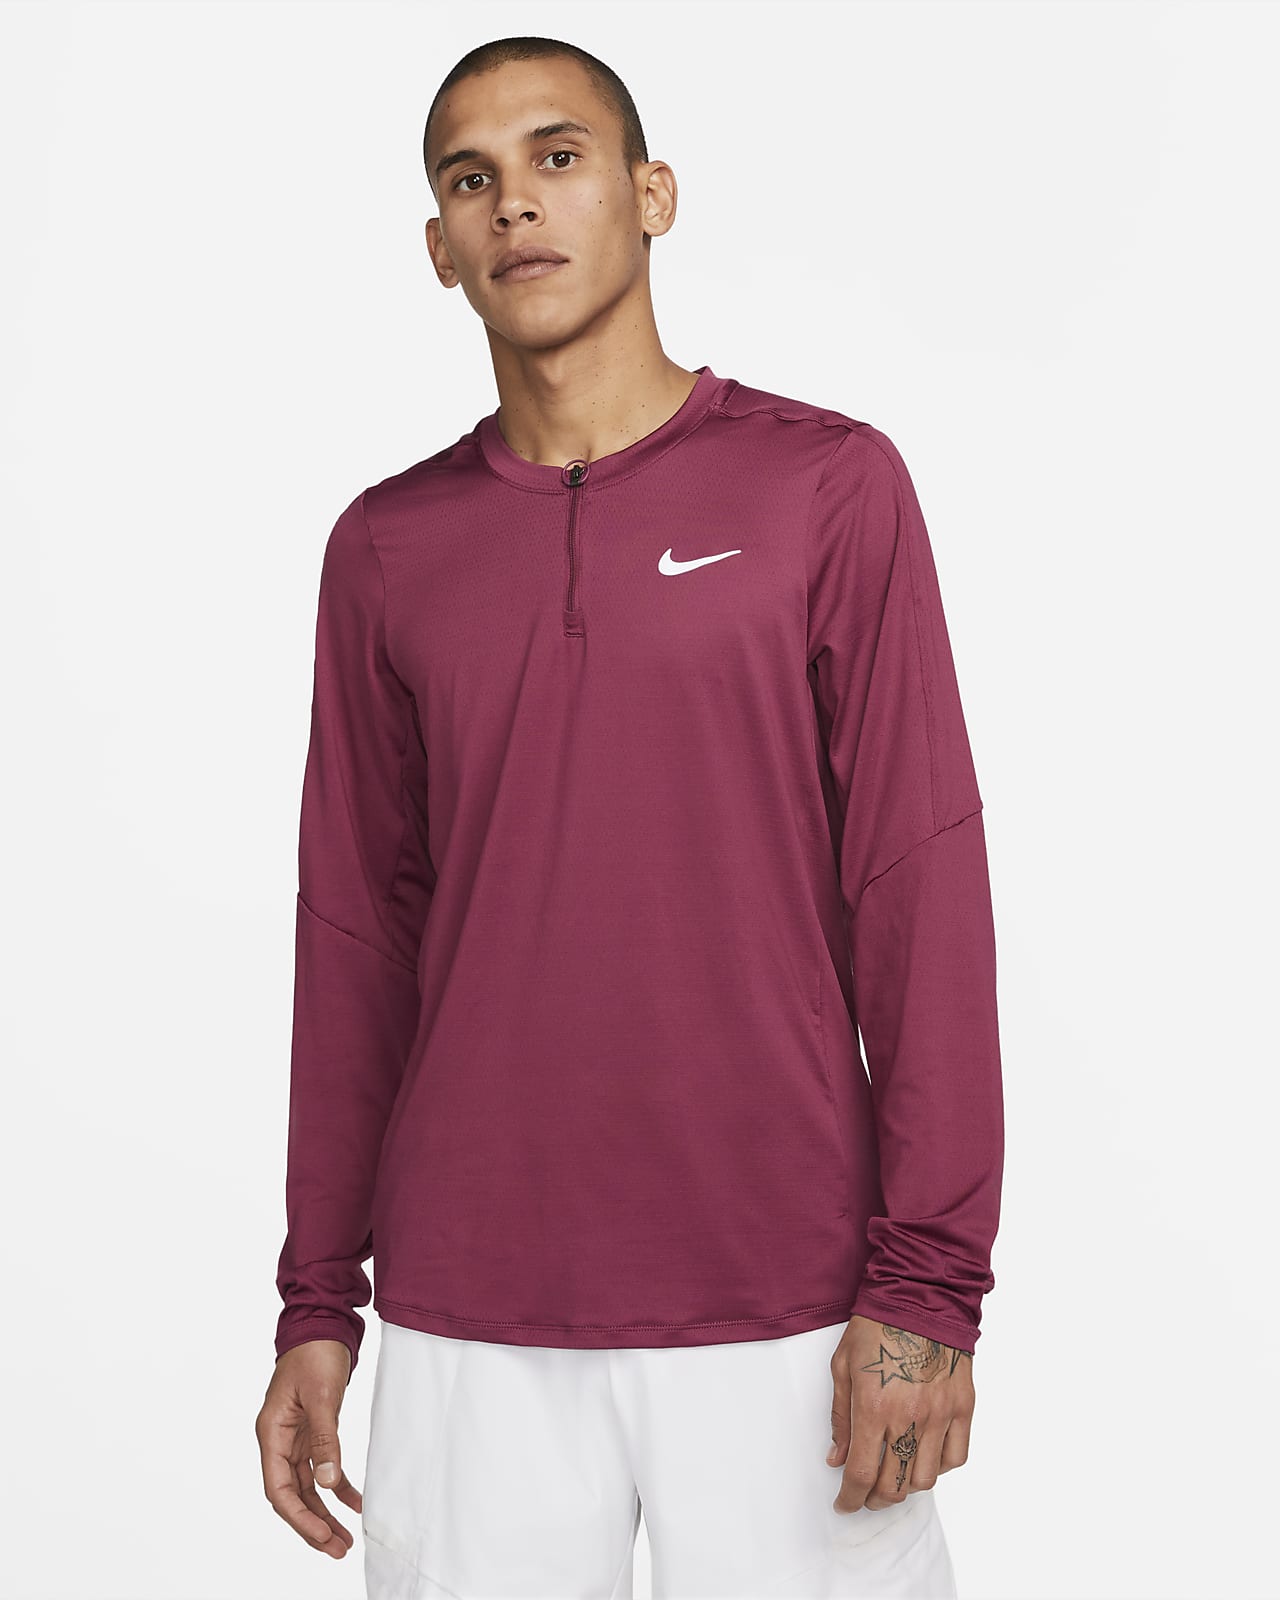 NikeCourt Dri-FIT Men's Half-Zip Tennis Top. Nike LU